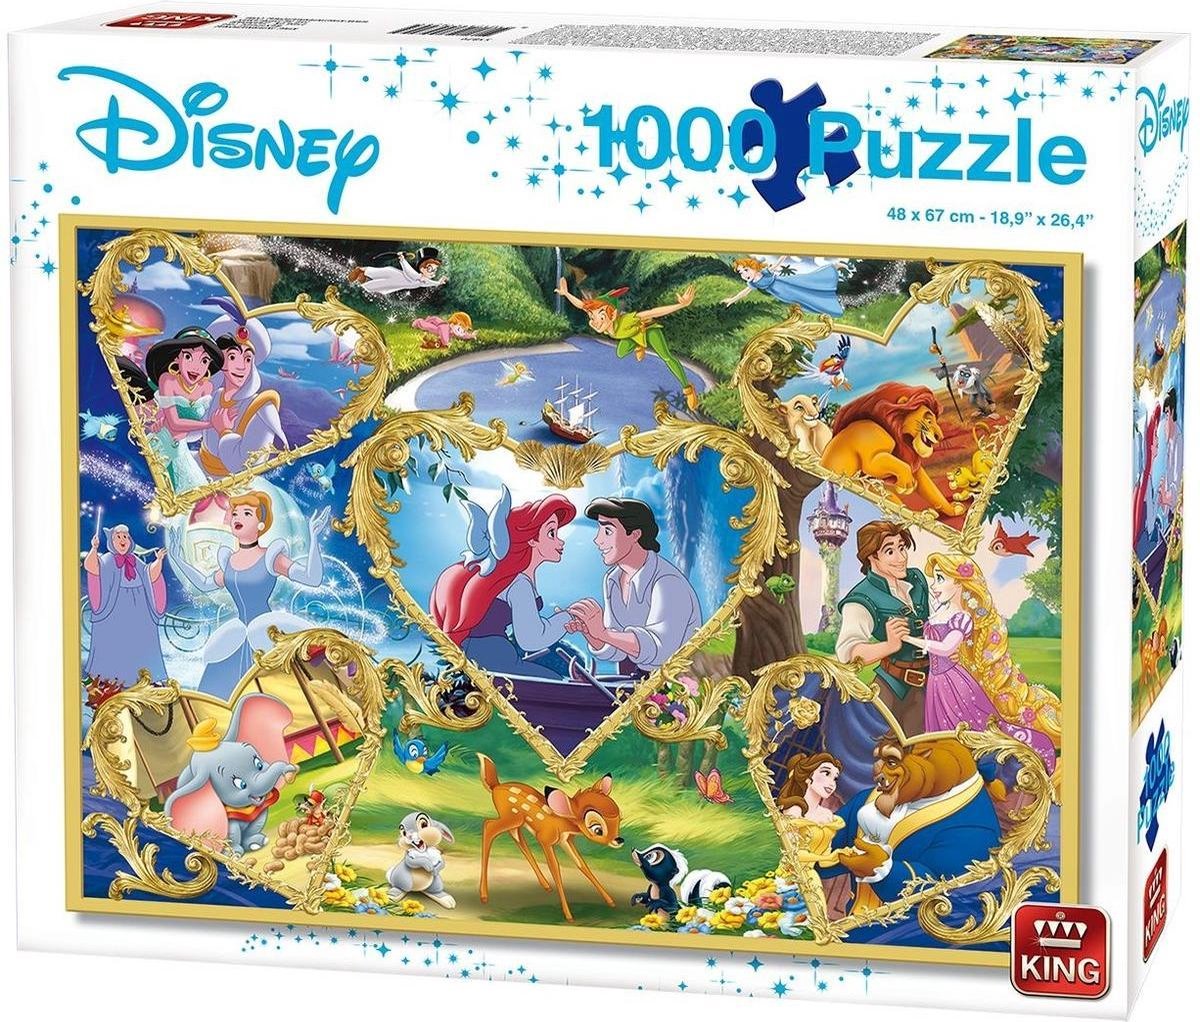 Puzzle 1000 pièces Disney - Movie Magic - King - Puzzle 68 x 49 cm | bol